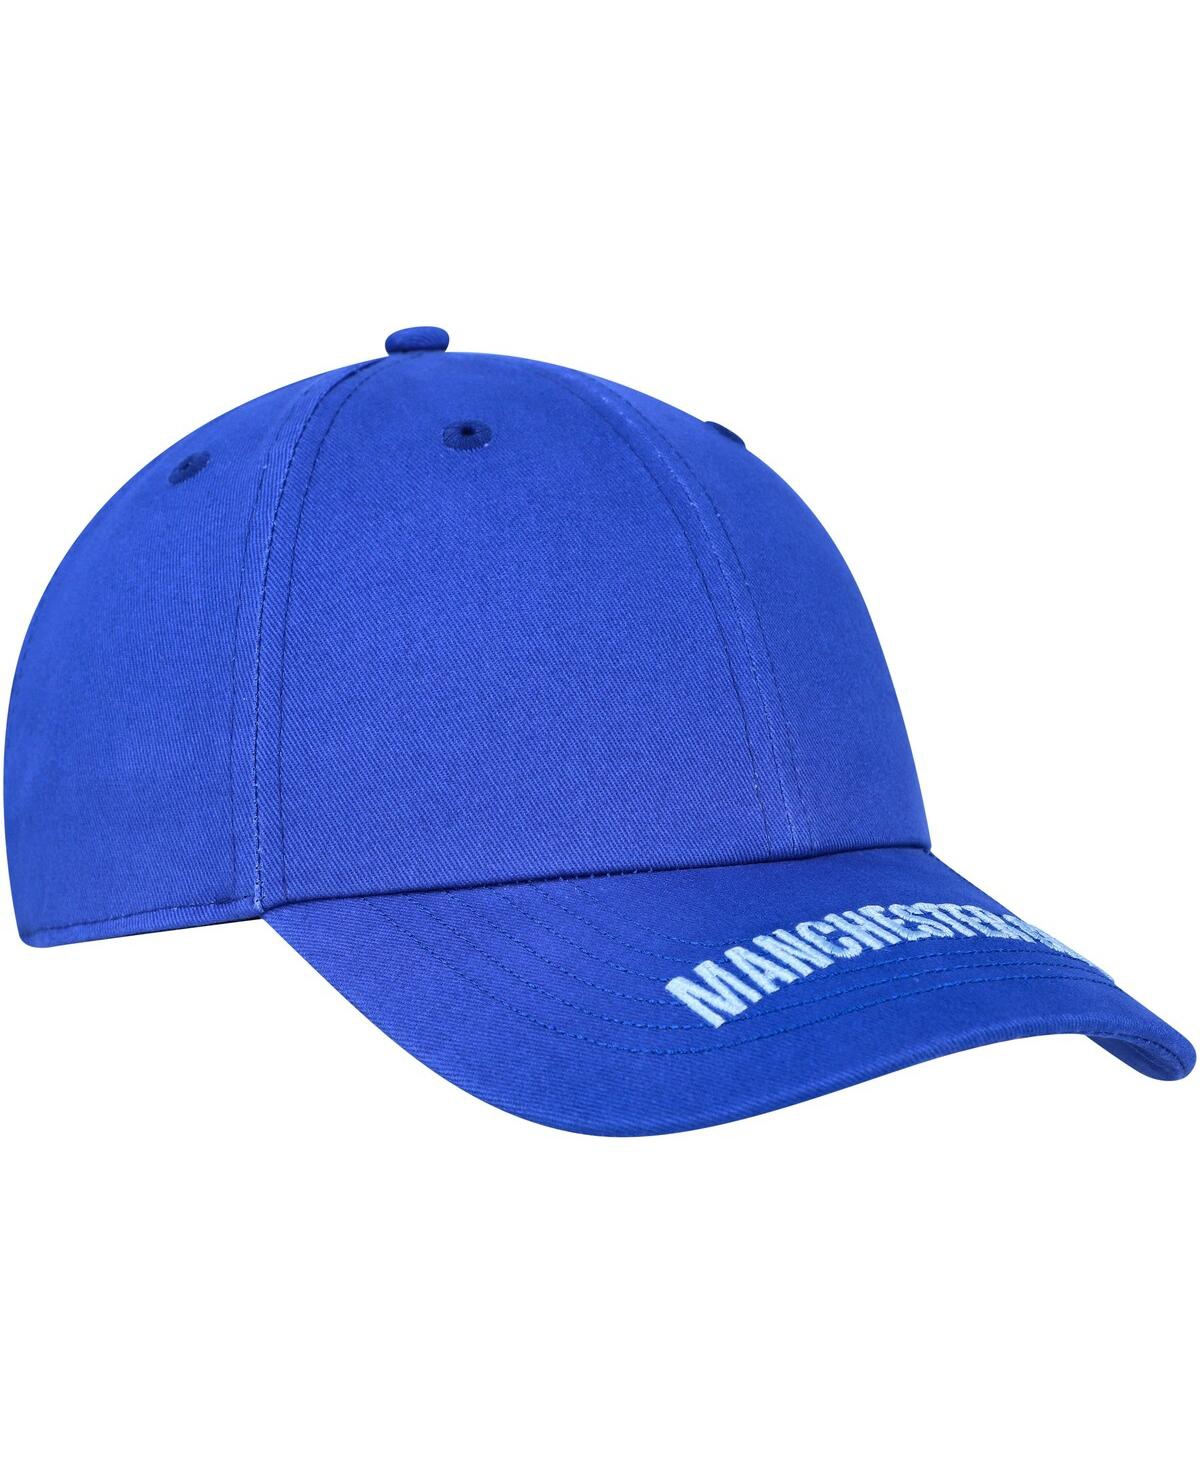 Shop Fan Ink Men's Blue Sky Manchester City City Adjustable Hat